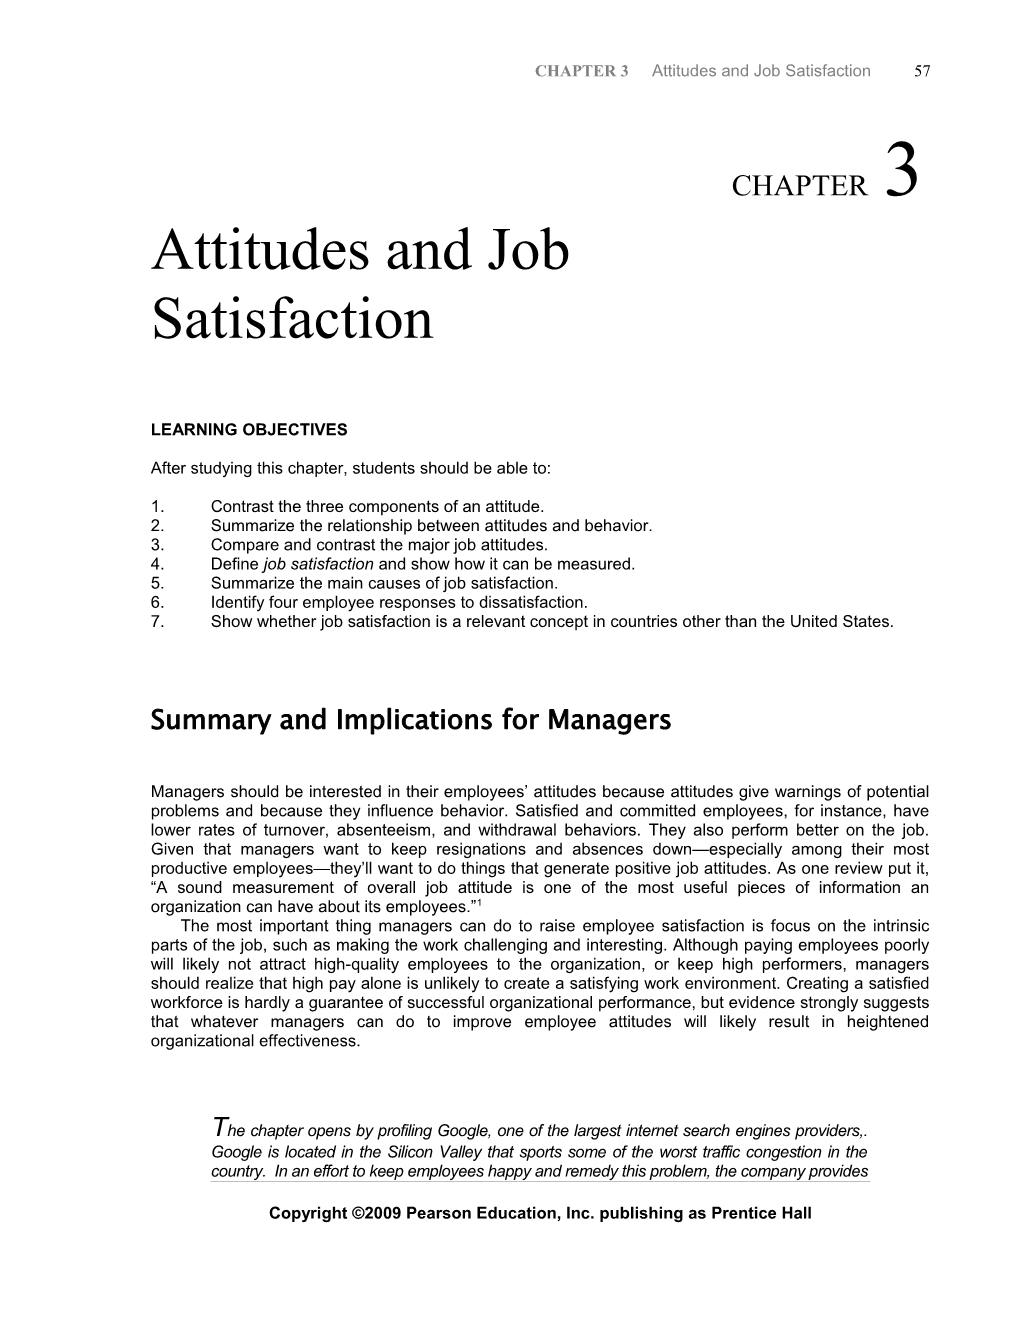 Values, Attitudes, And Job Satisfaction